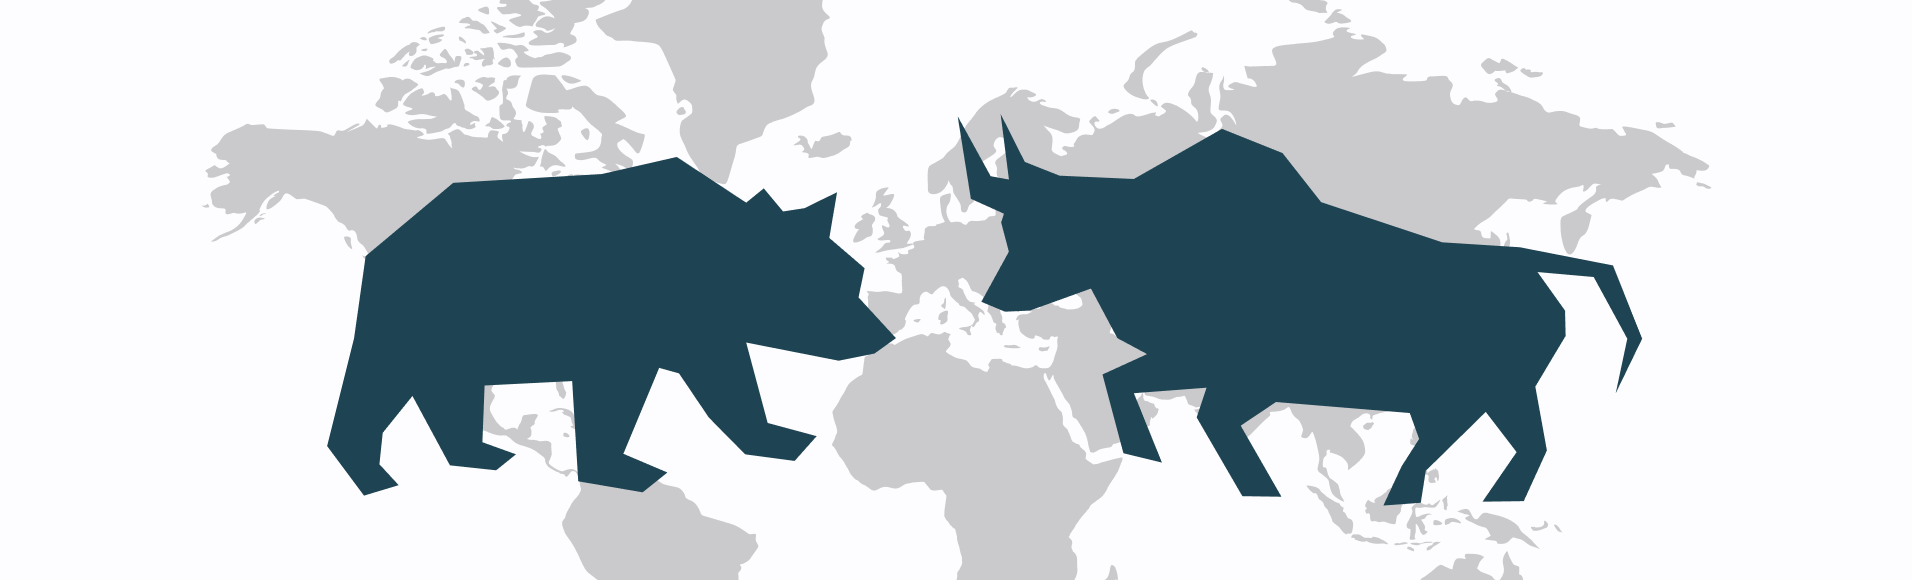 Basics of binary options: bulls and bears in financial markets